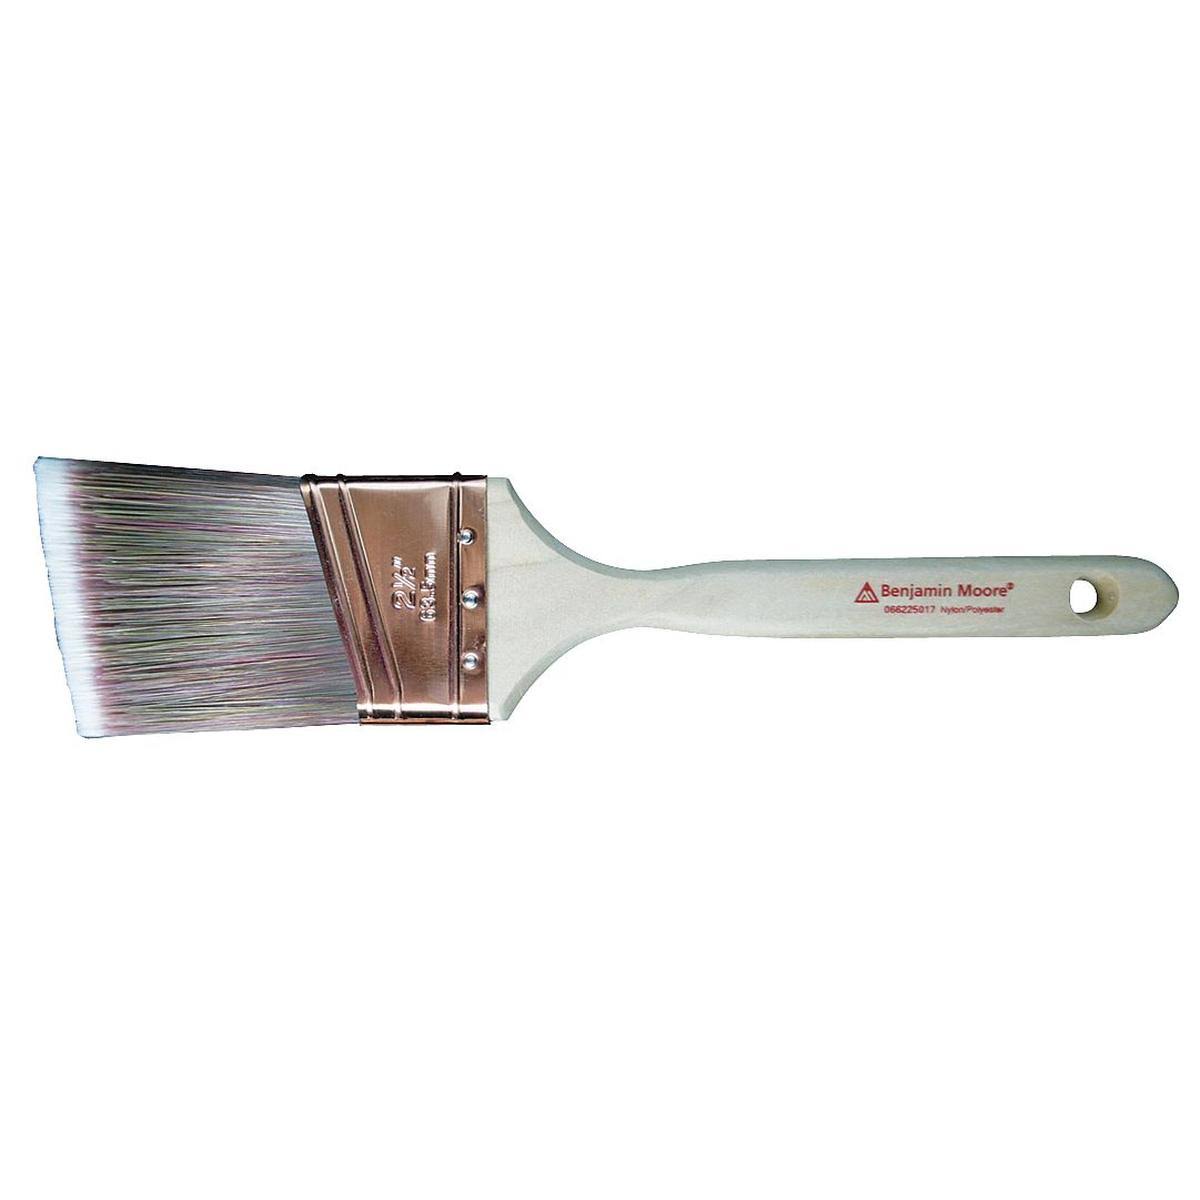 Benjamin Moore 066215017 Paint Brush - 1 1/2"